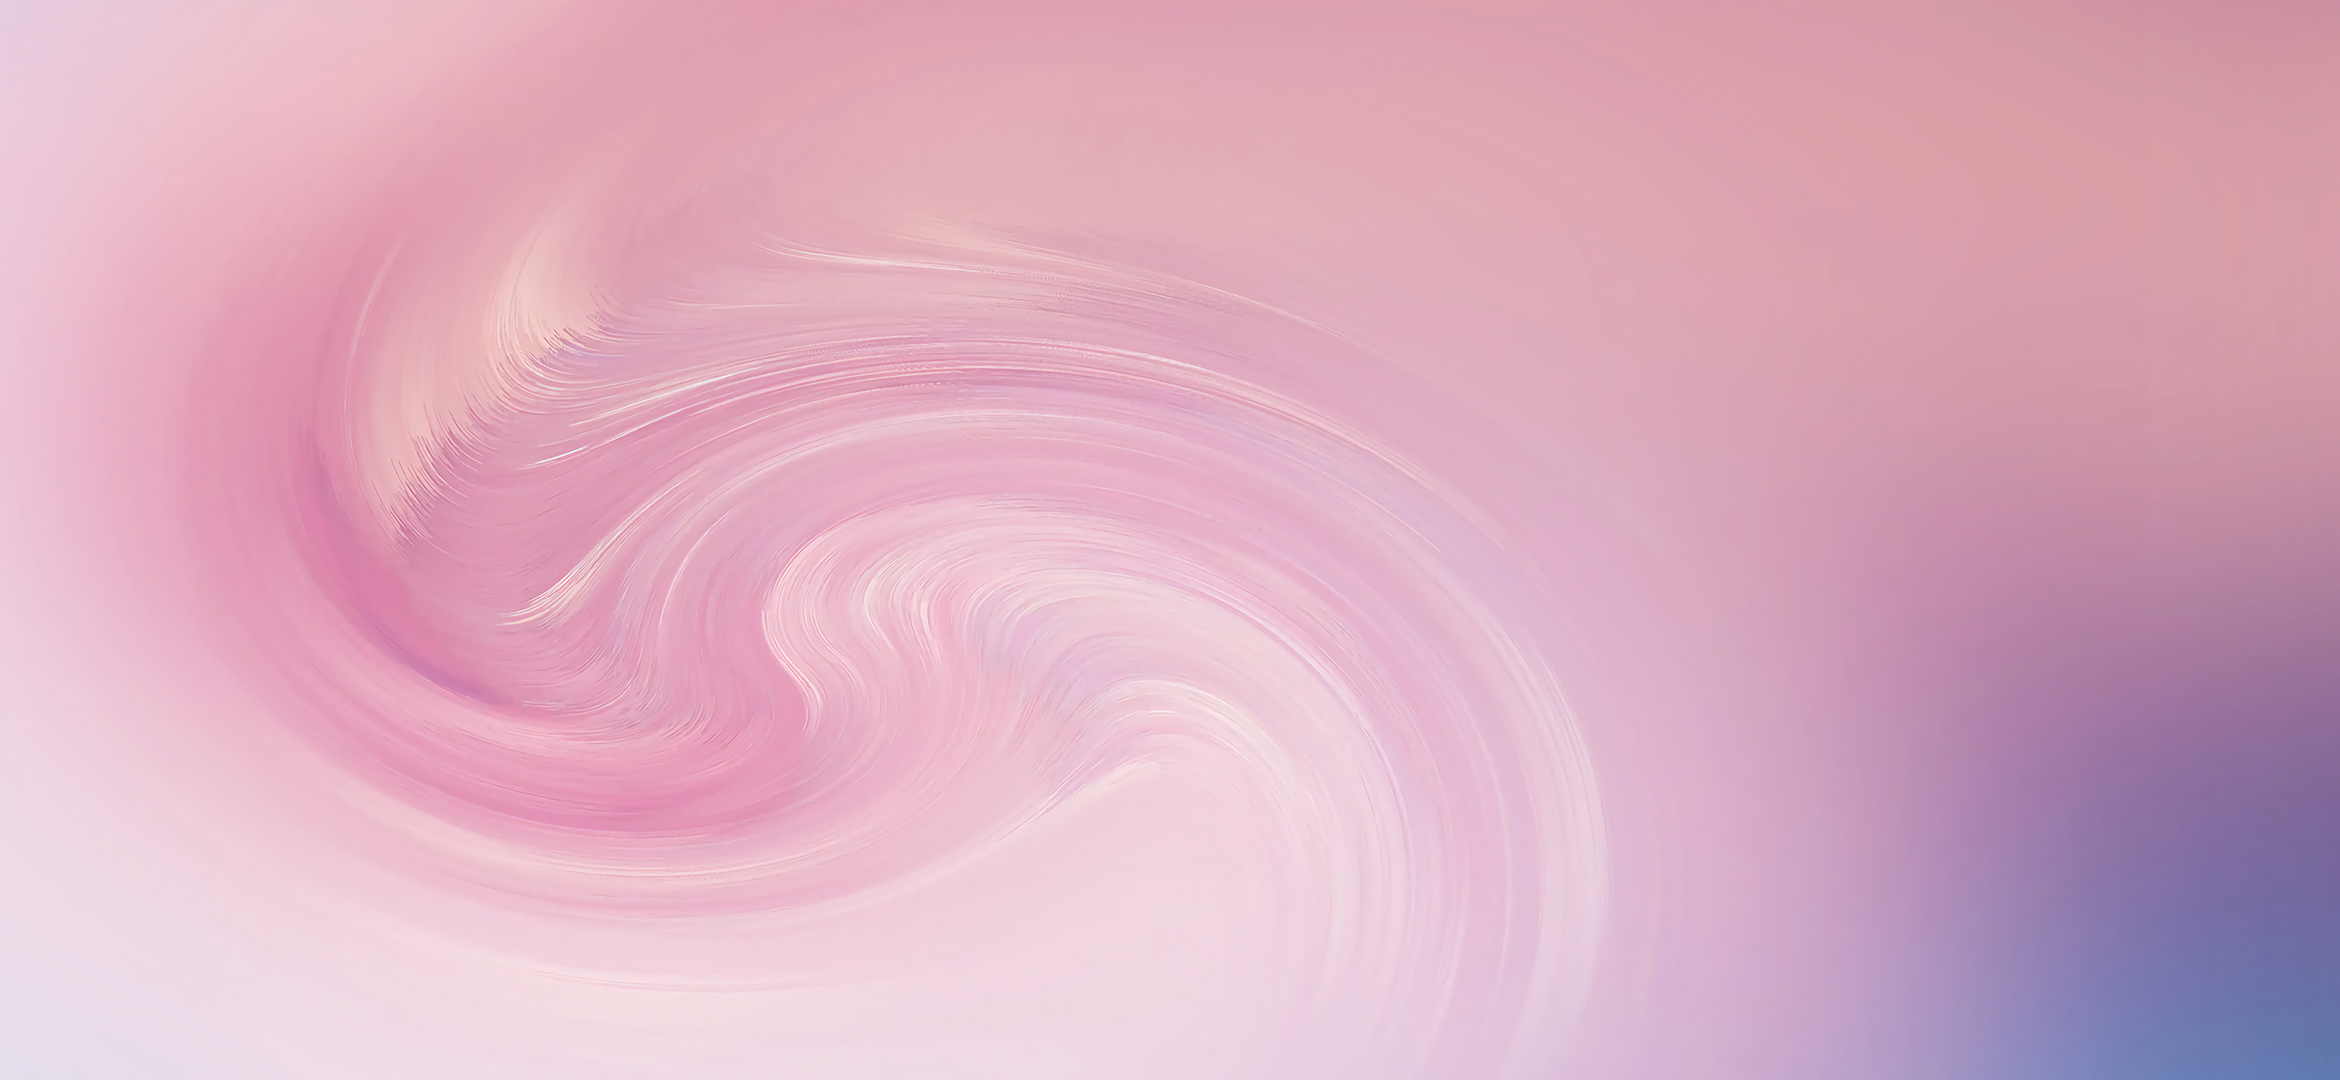 Swirls Digital Art Artwork Shapes Abstract 2340x1080